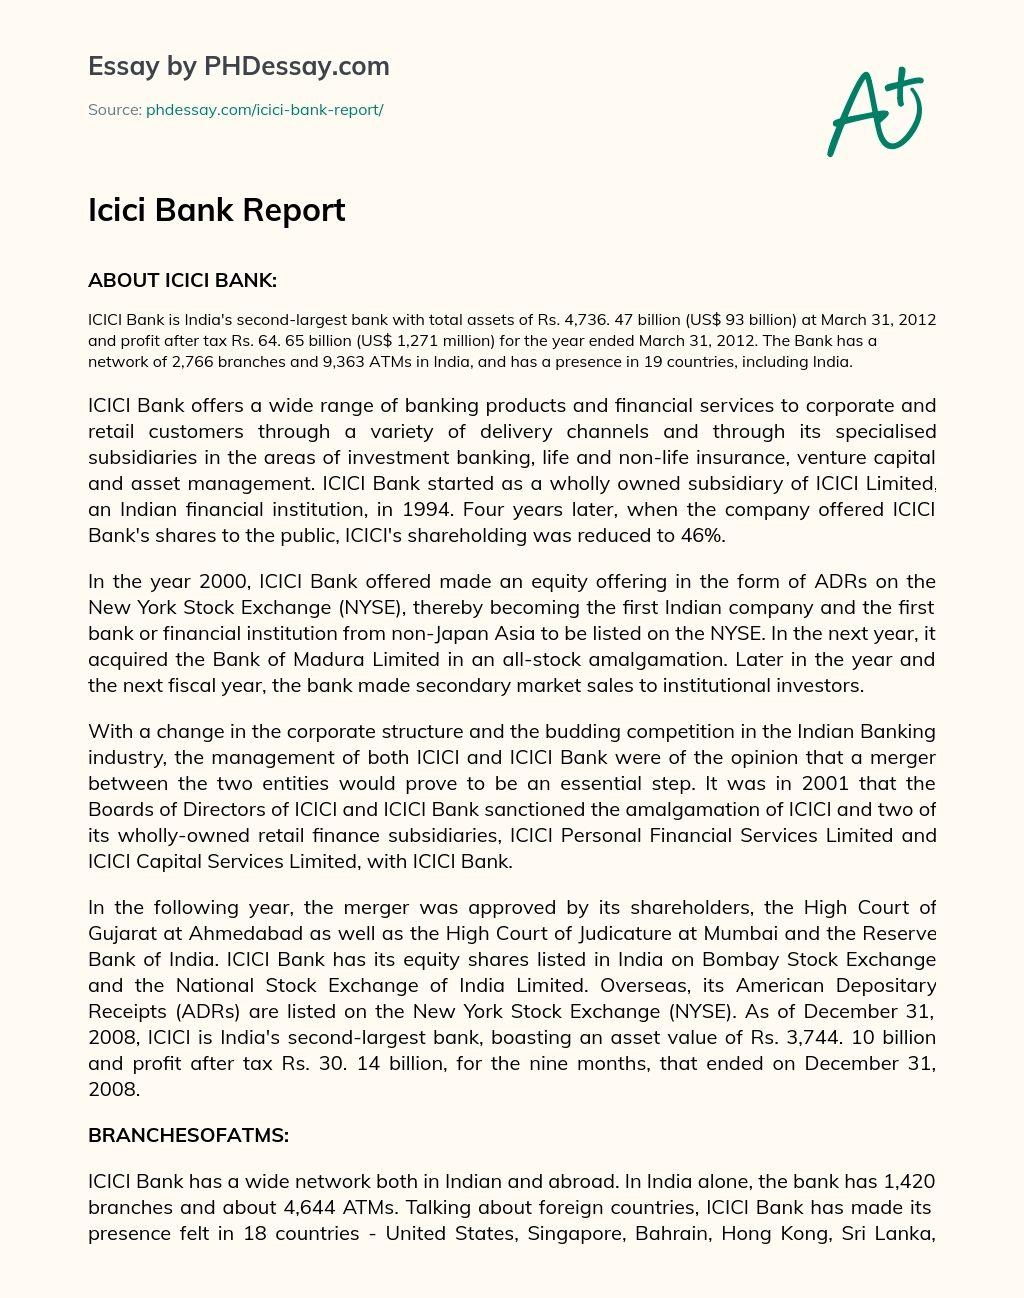 Icici Bank Report essay